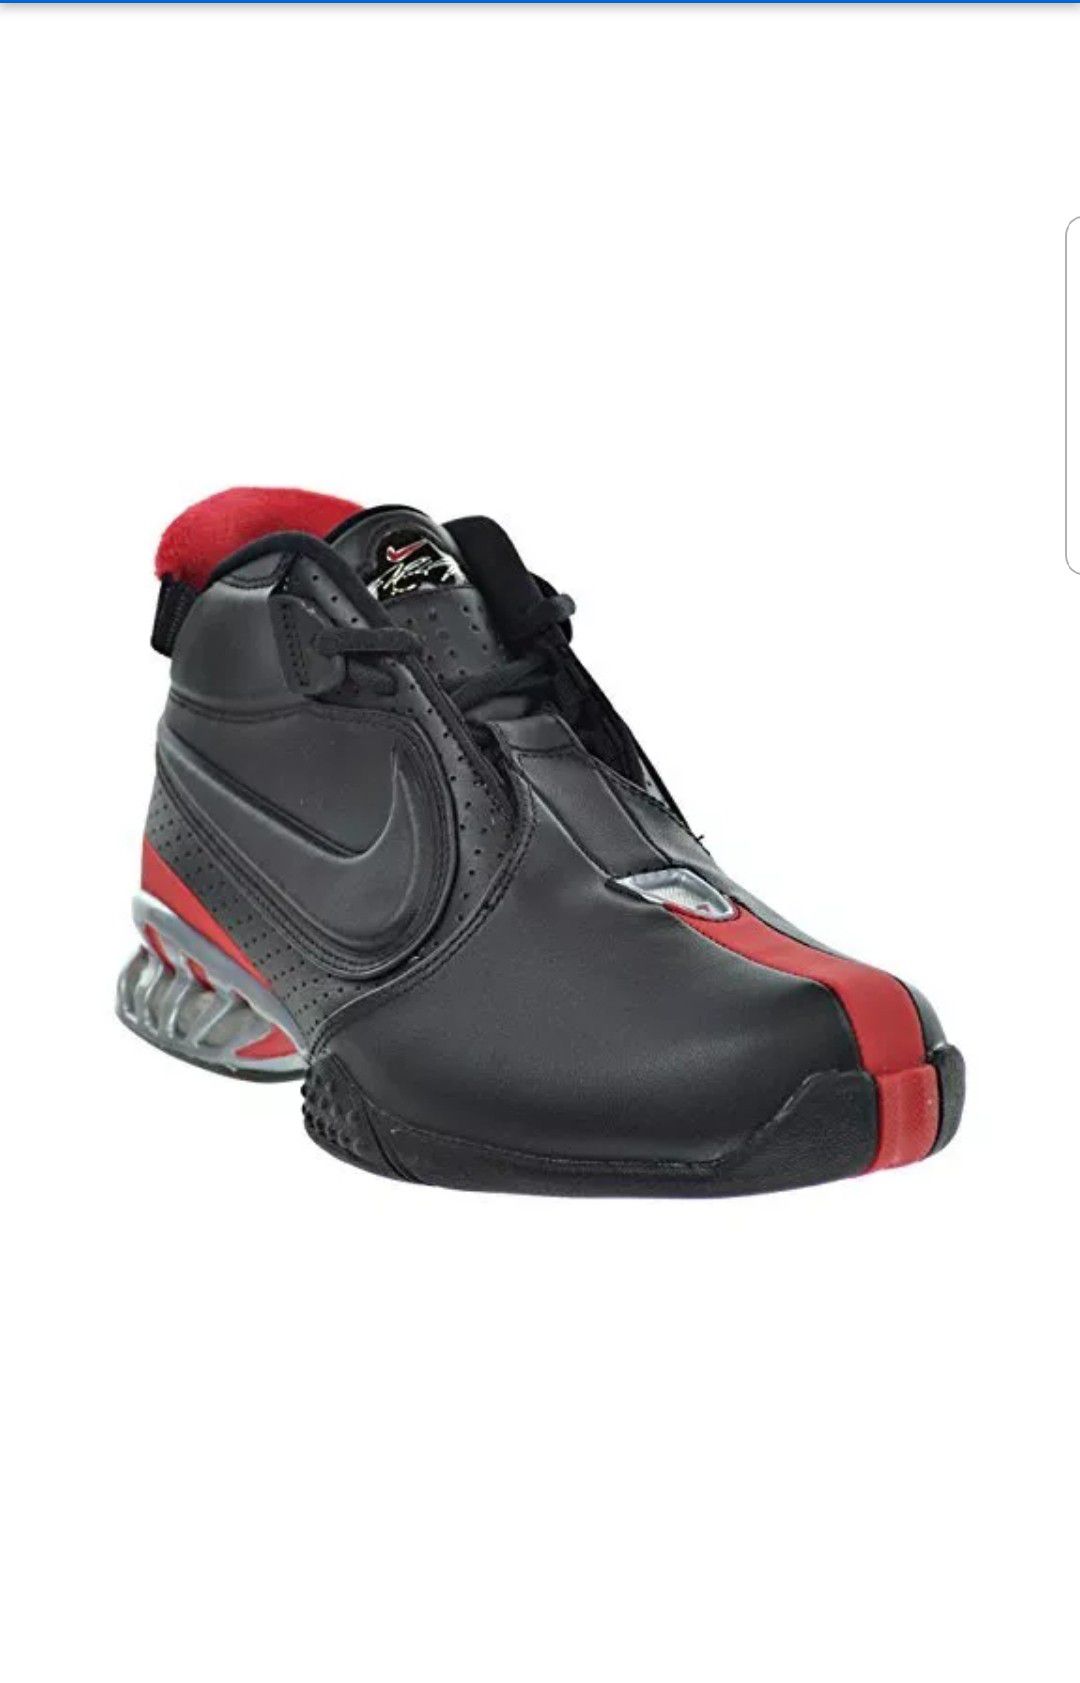 On the way to his Nike Zoom Vick 1s, Michael Vick sent Air Jordan